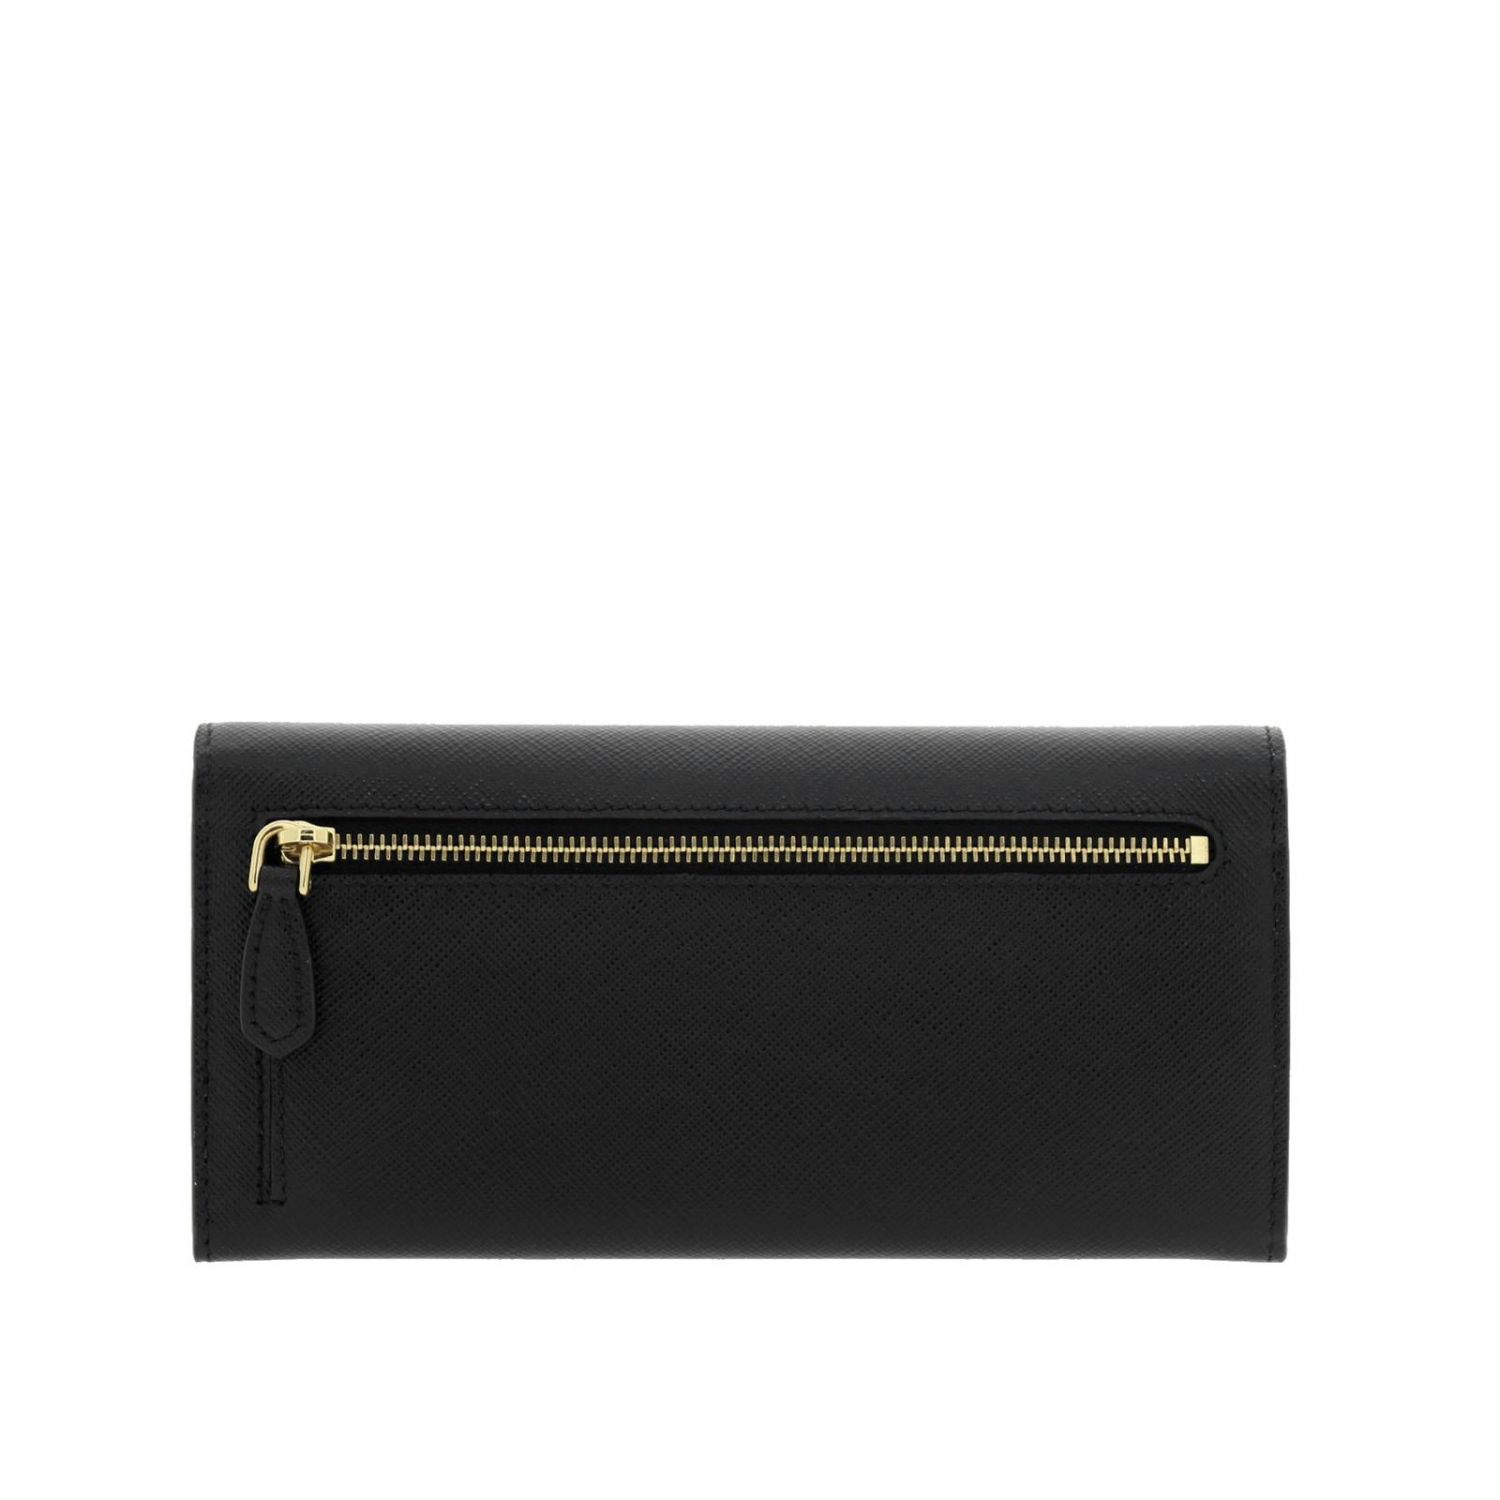 Wallet women Prada | Wallet Prada Women Black | Wallet Prada 1MH132 ...